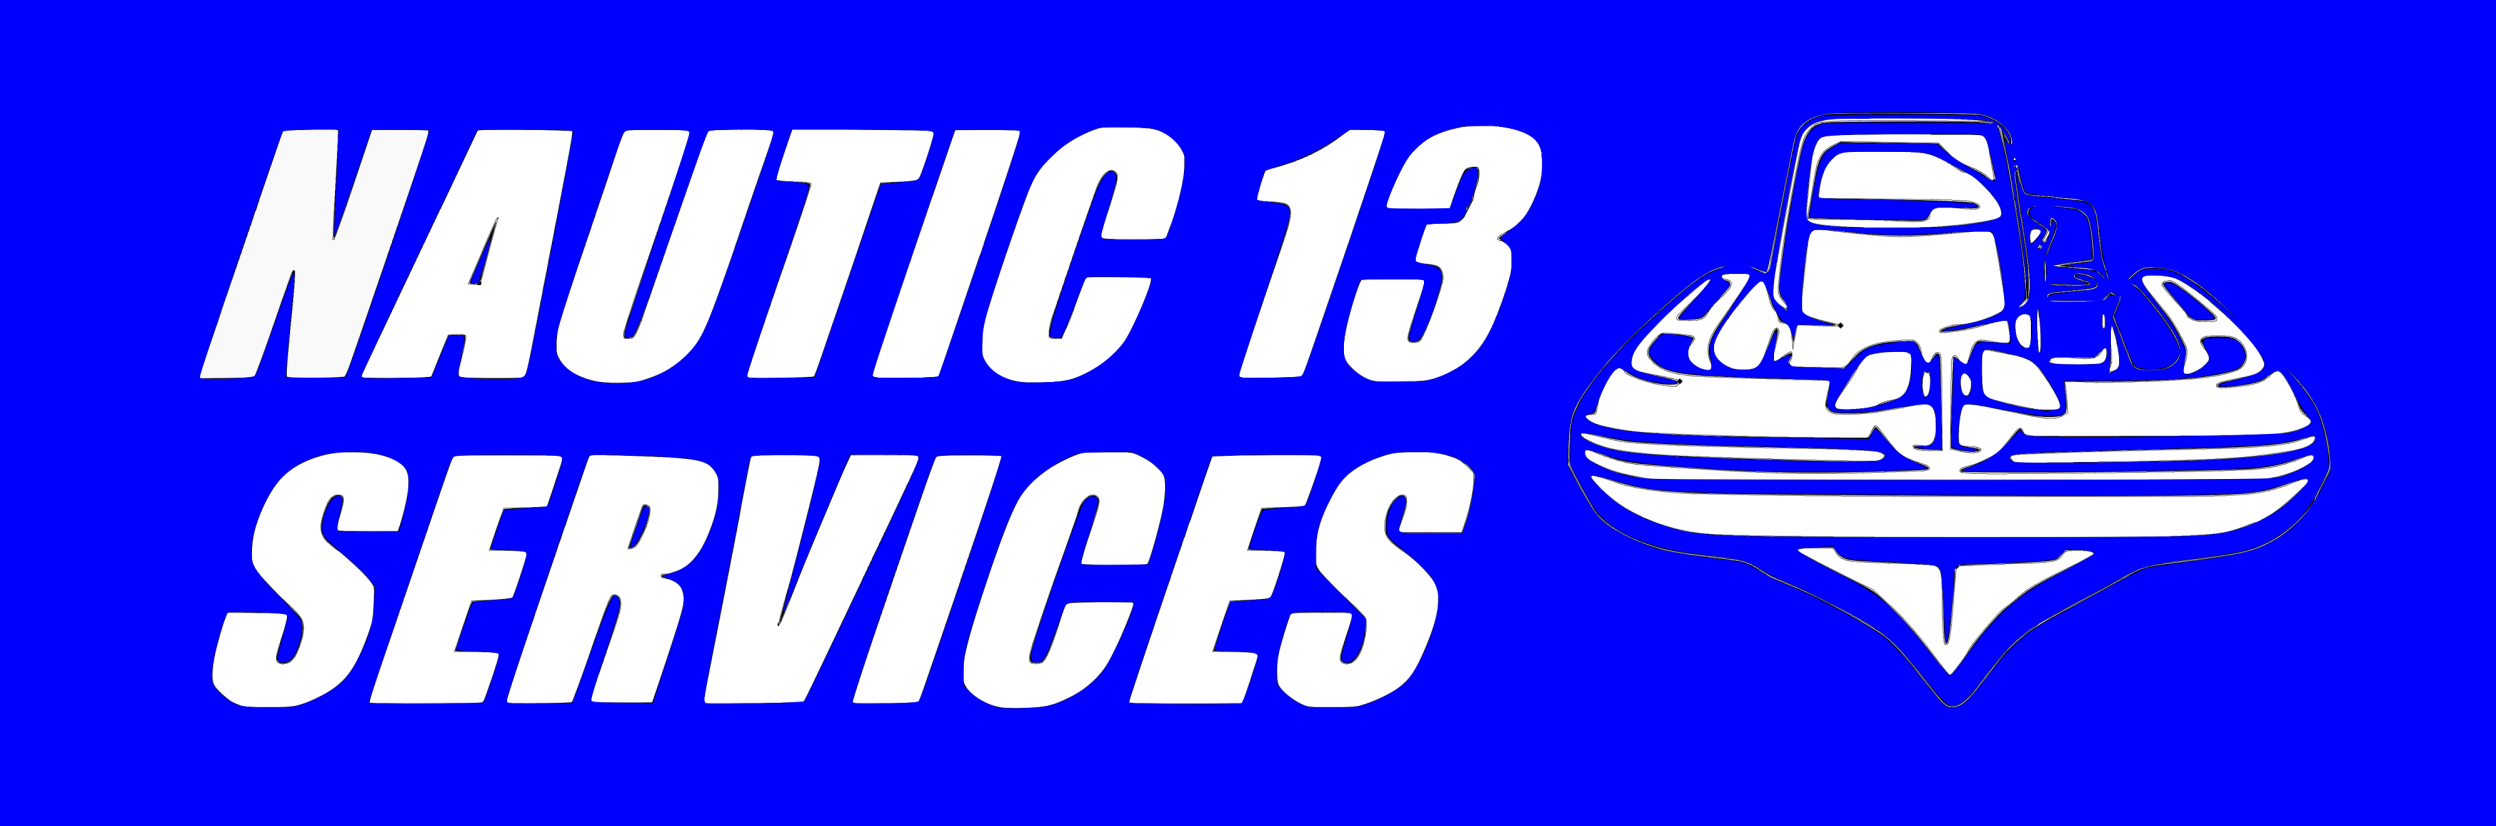 nautic 13 services reparation semi-rigide